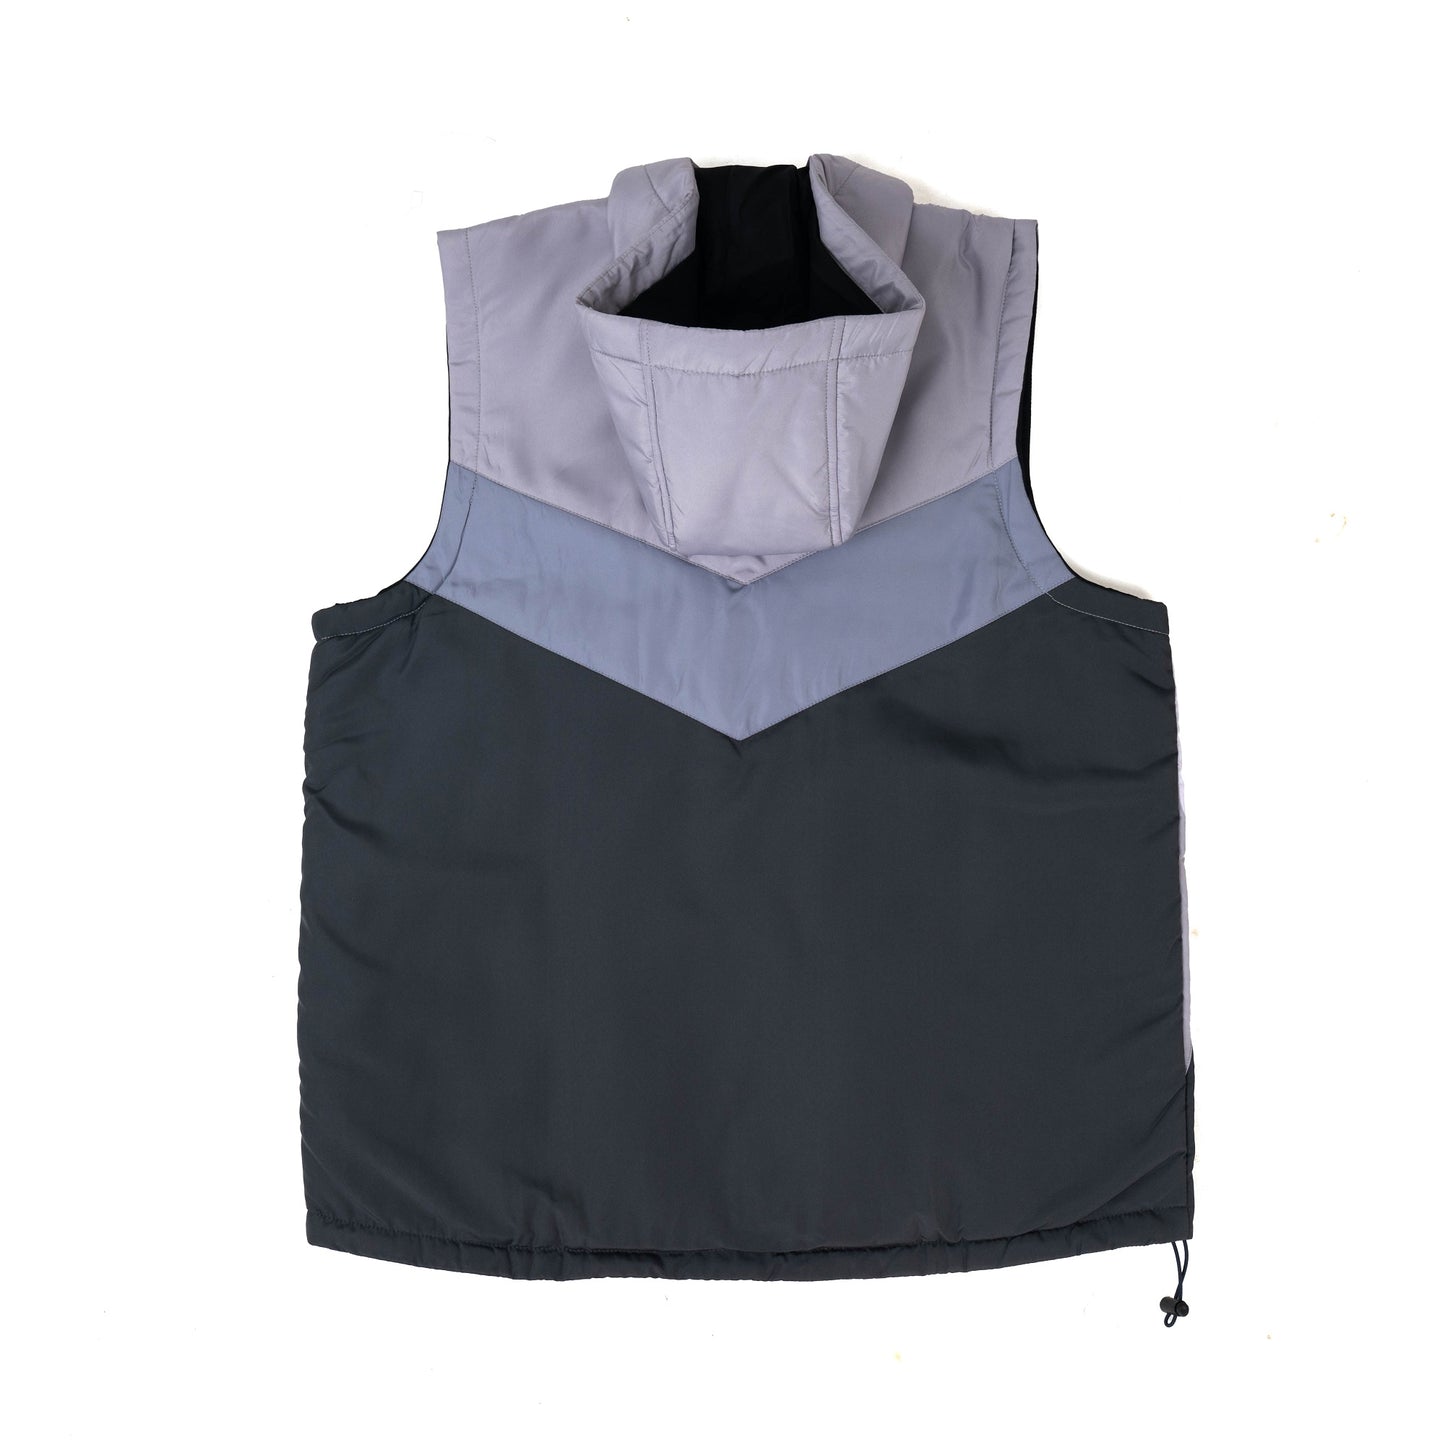 AZA Vest Insulated Edition - Grey